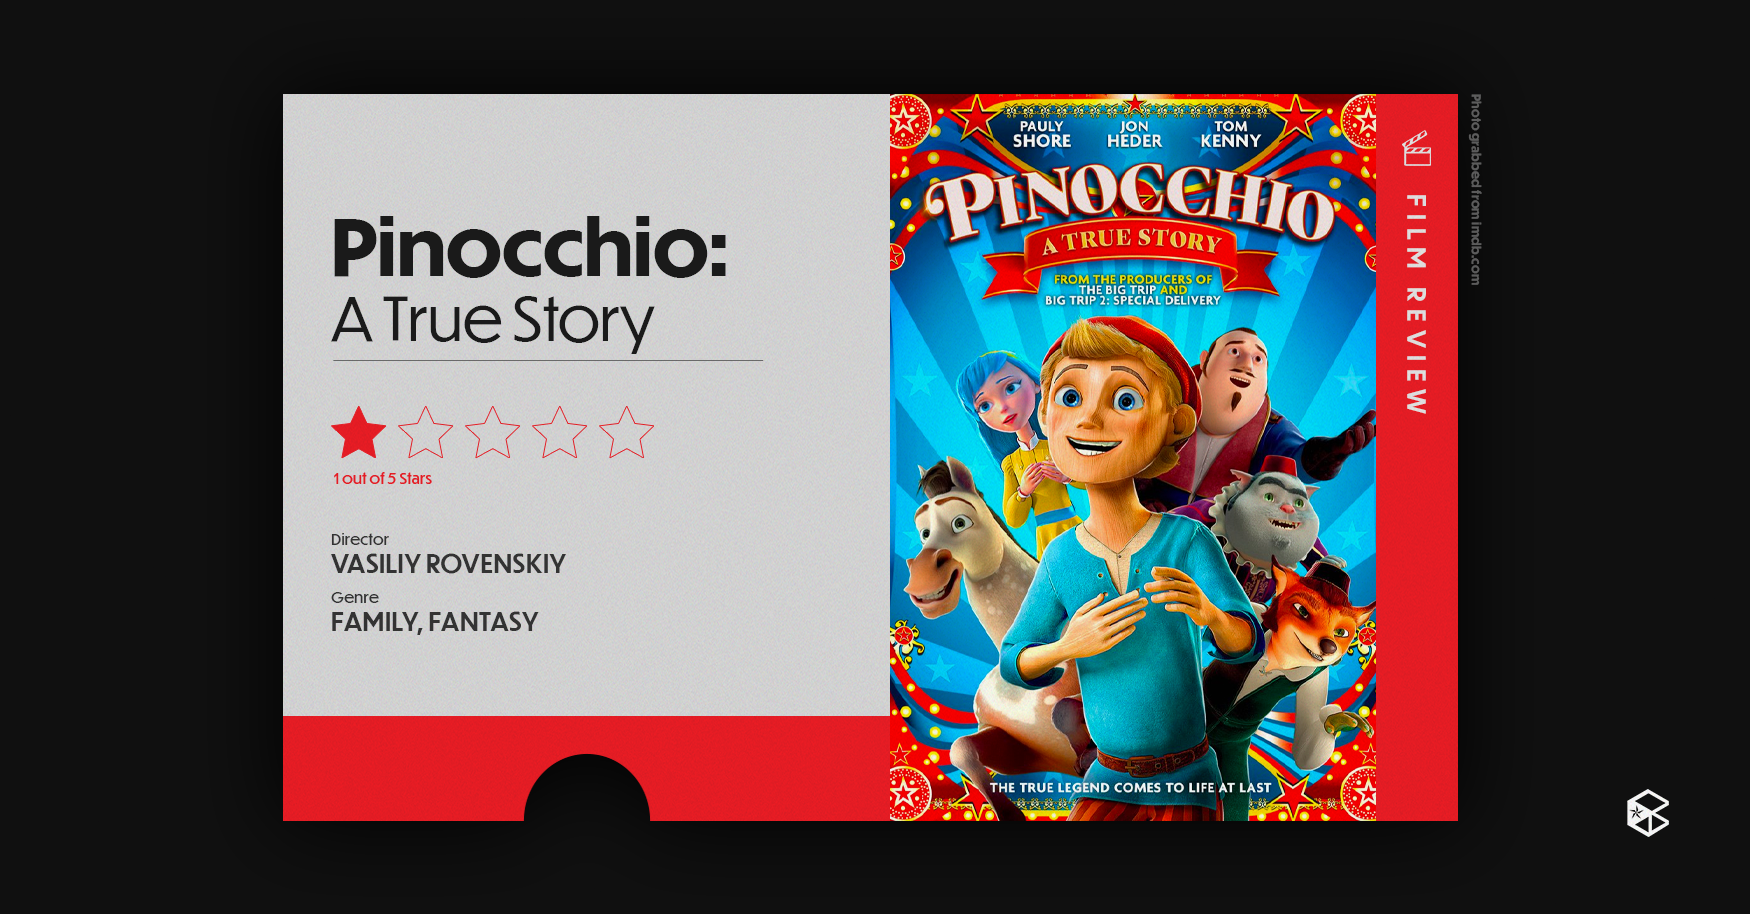 01072023 Blip   Pinocchio   A True Story Review